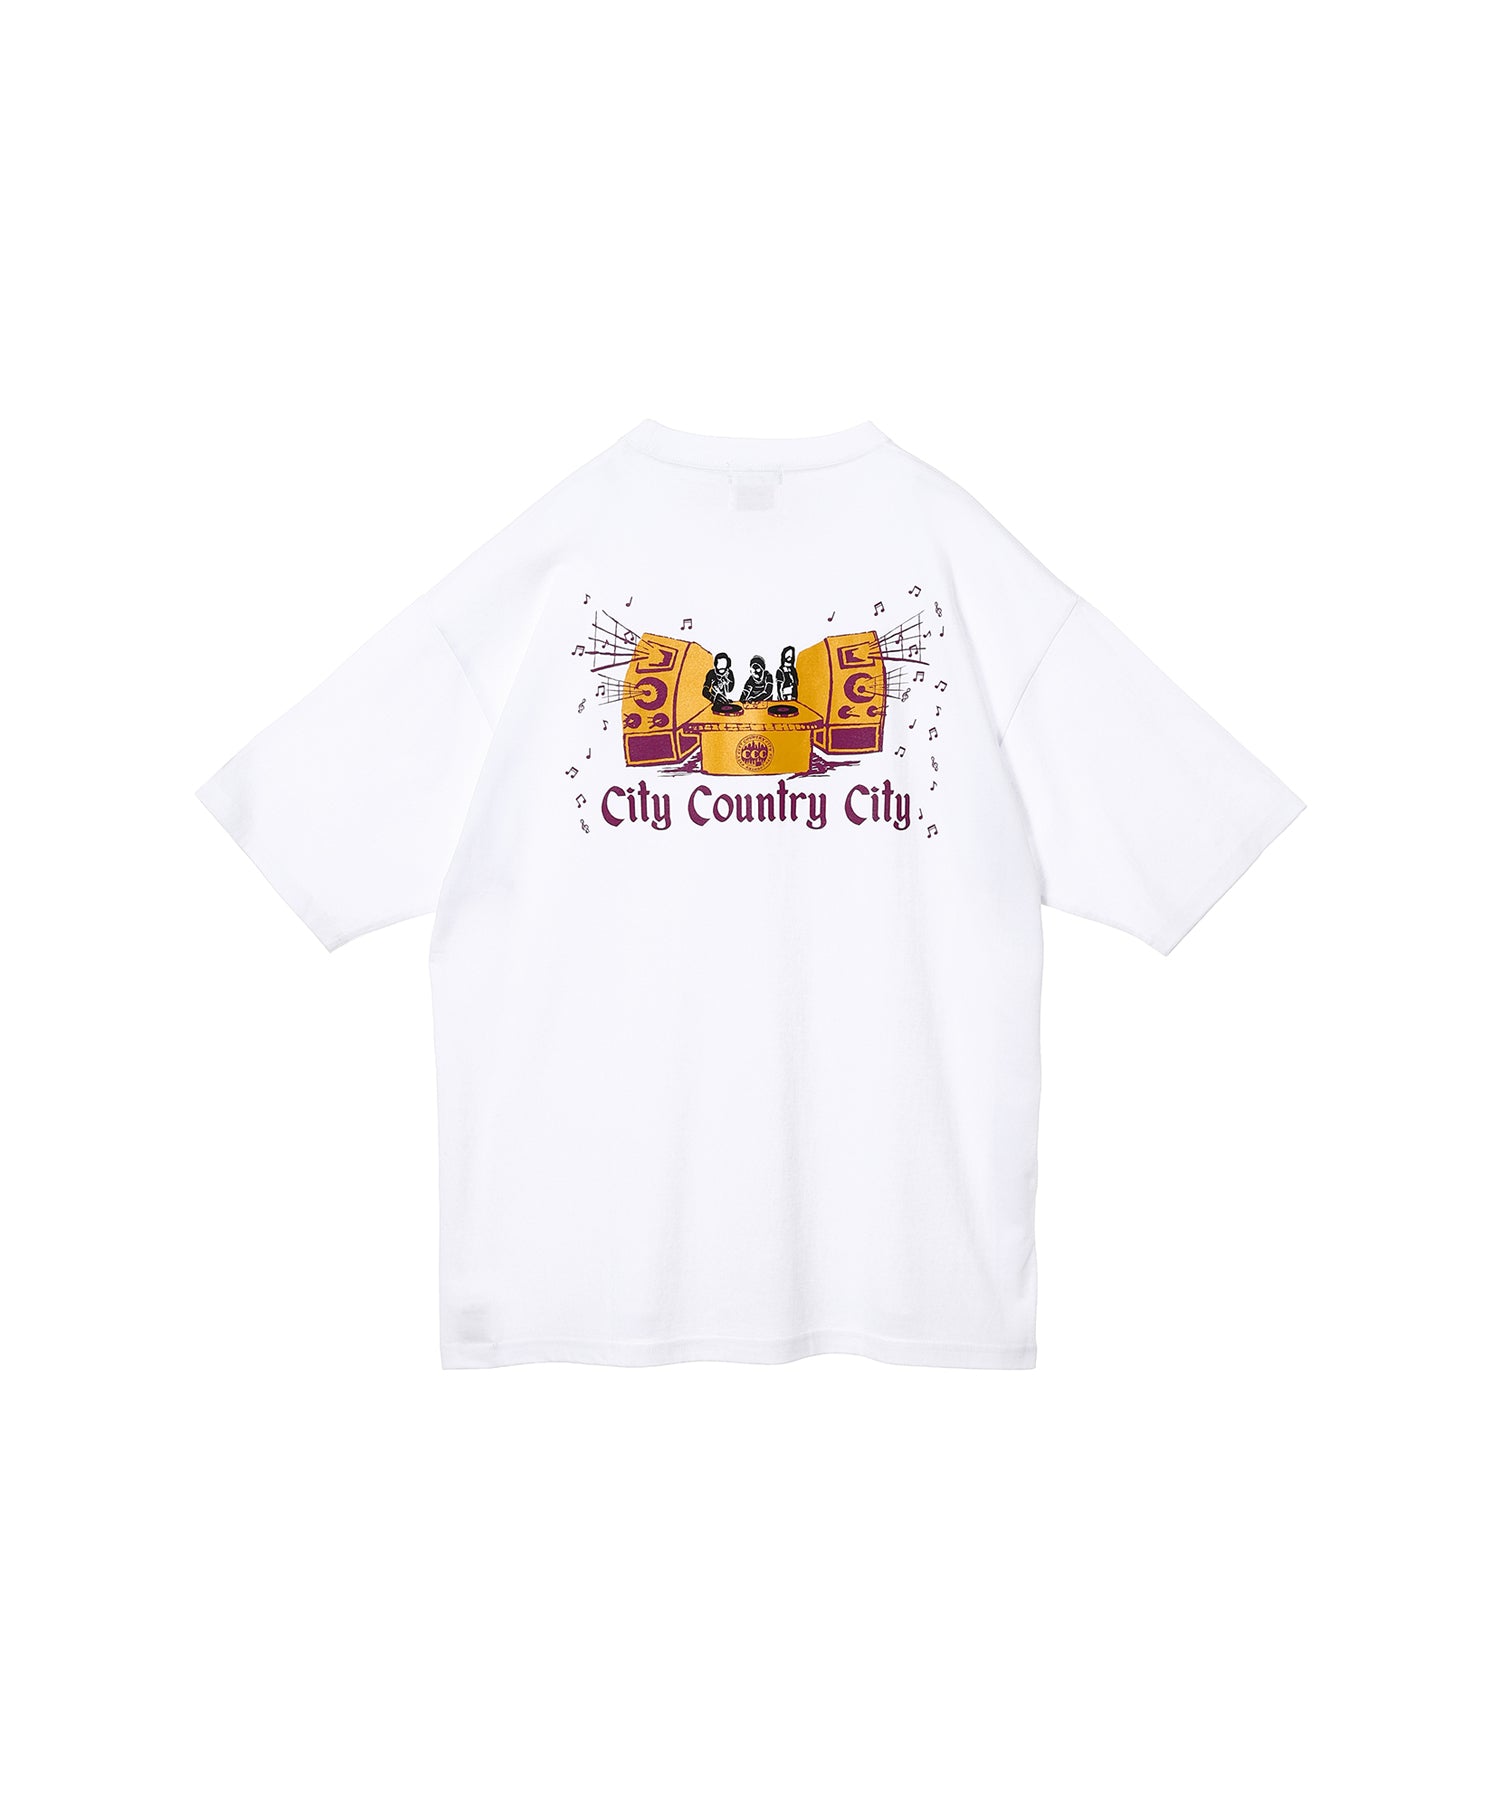 Cotton T-Shirt_City Country City